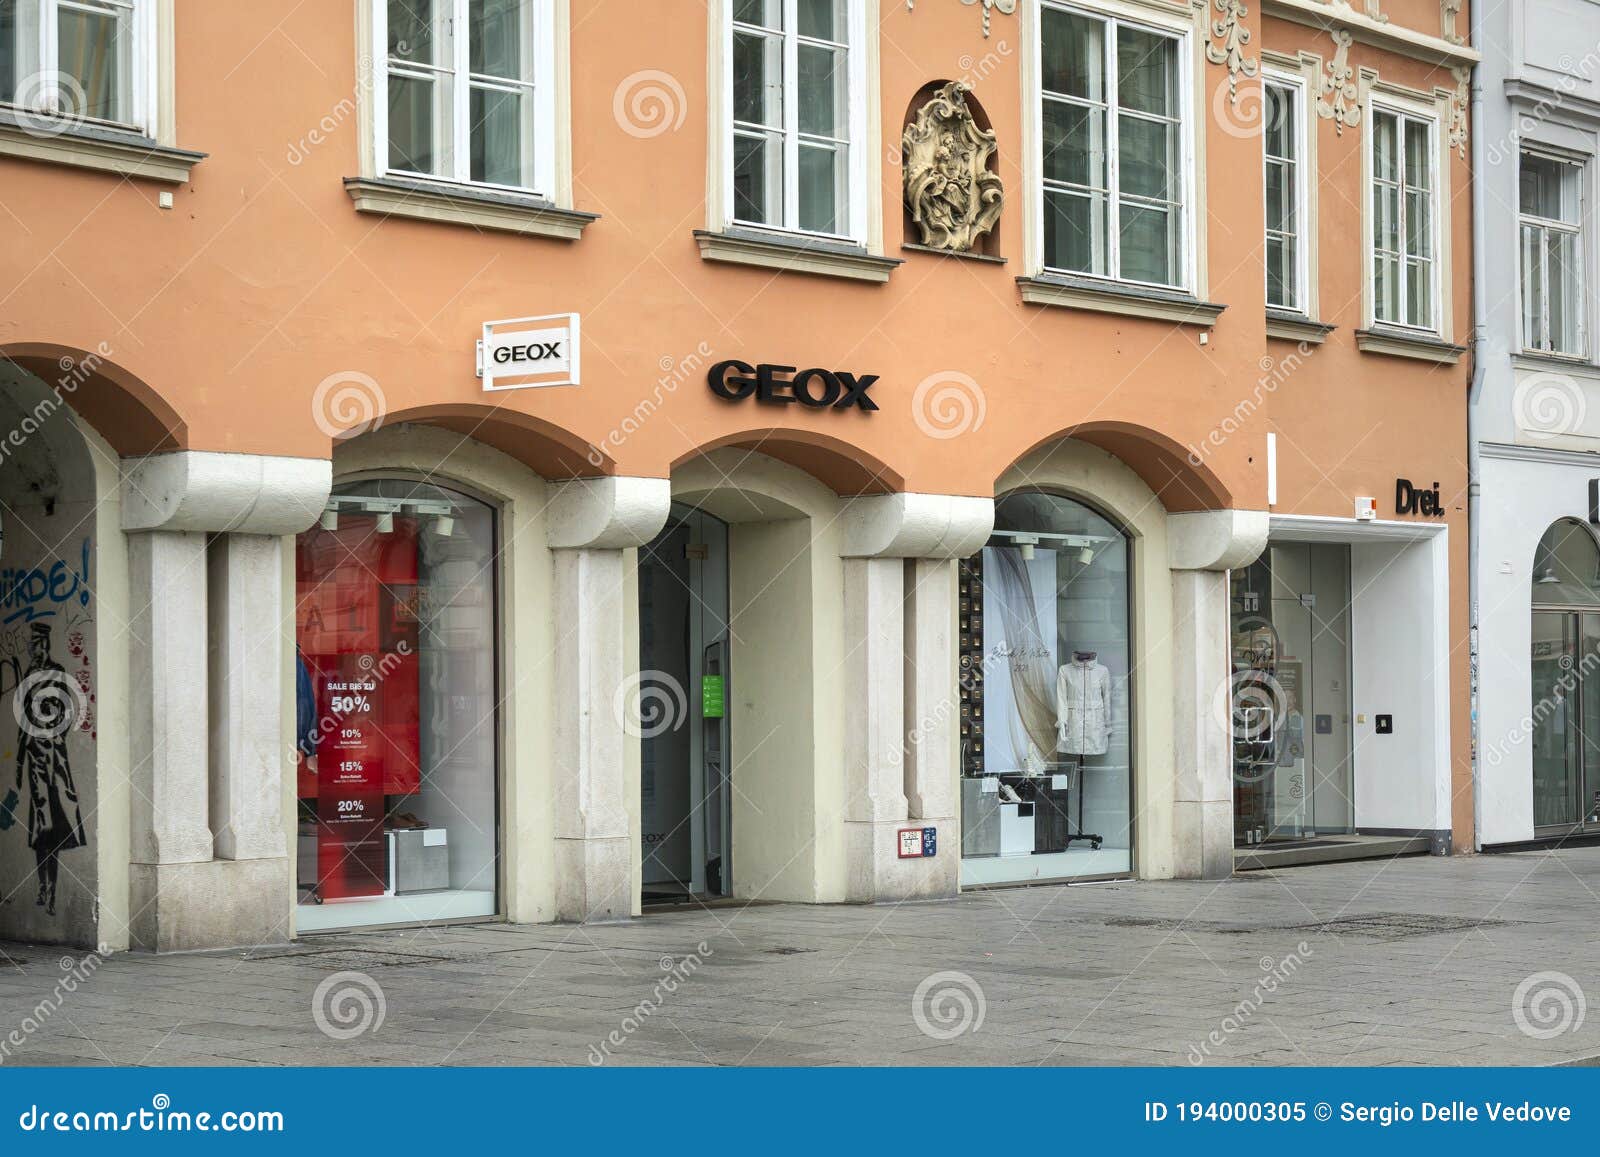 Arcaico reptiles panel Geox Brand Shop Window in Graz Editorial Image - Image of city, exterior:  194000305